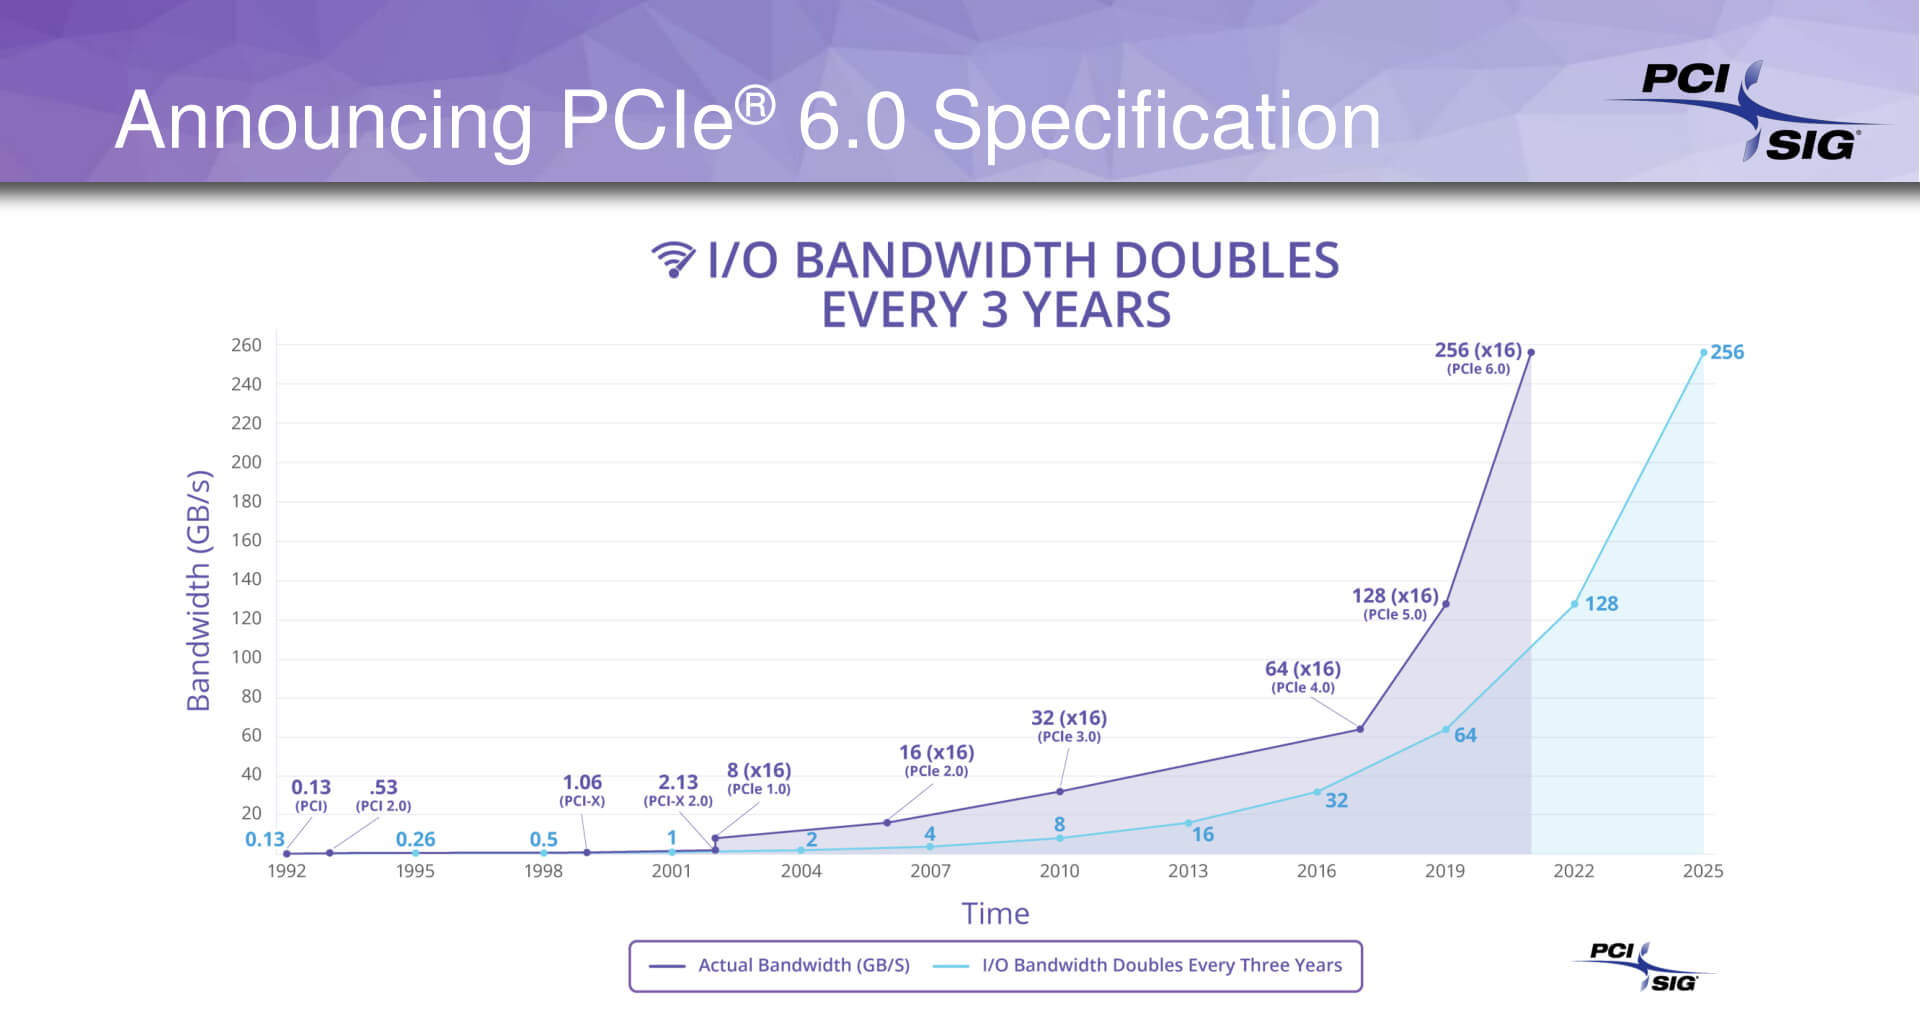 Spesifikasi PCI Express 6.0 Diumumkan Dengan Kelajuan 256GB/s, 2x Lebih Pantas Berbanding PCIe 5.0